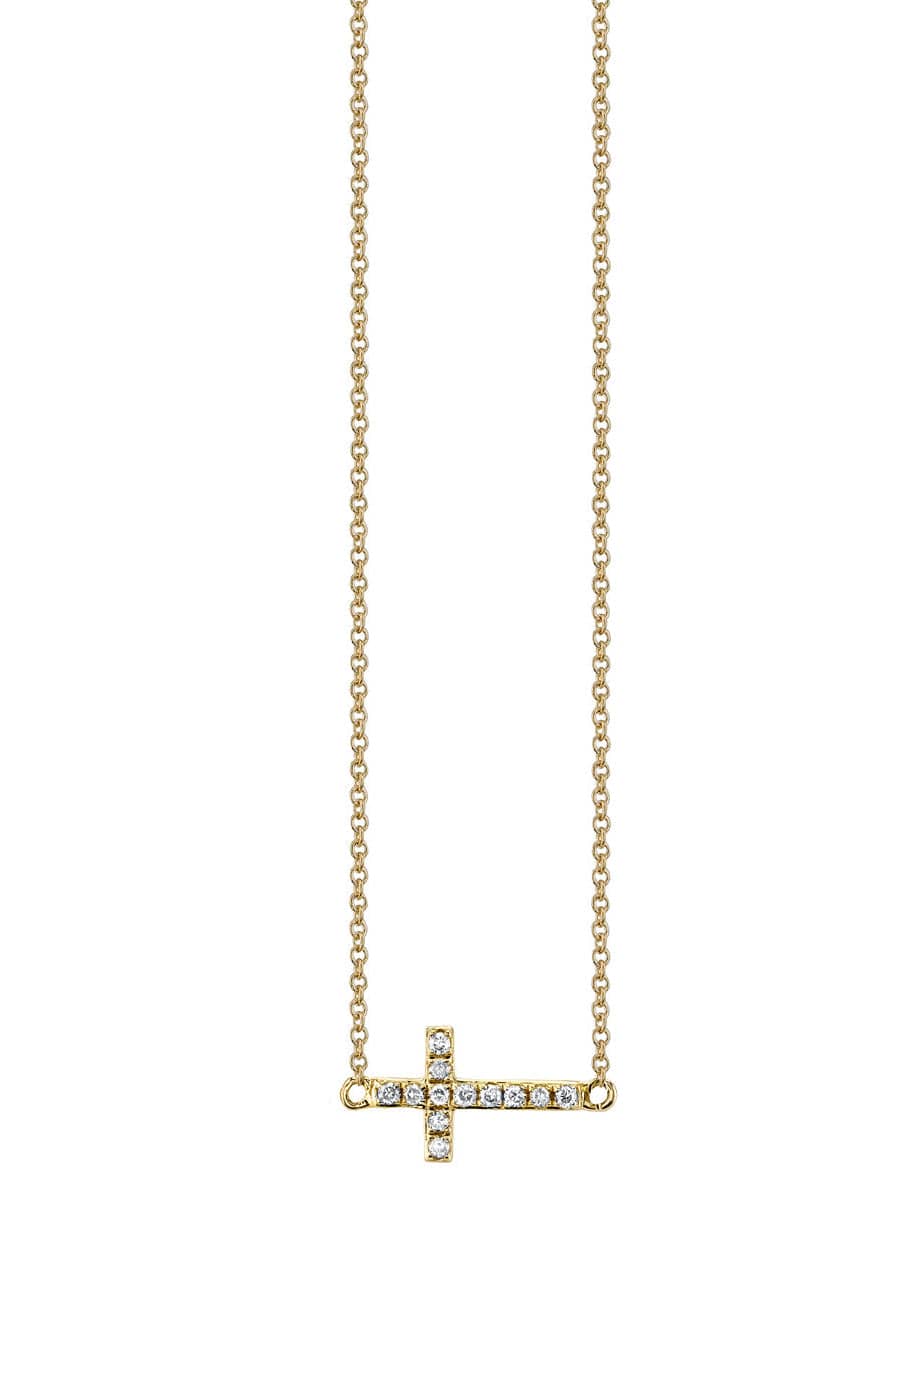 SYDNEY EVAN-Small Diamond Sideways Cross Necklace-YELLOW GOLD